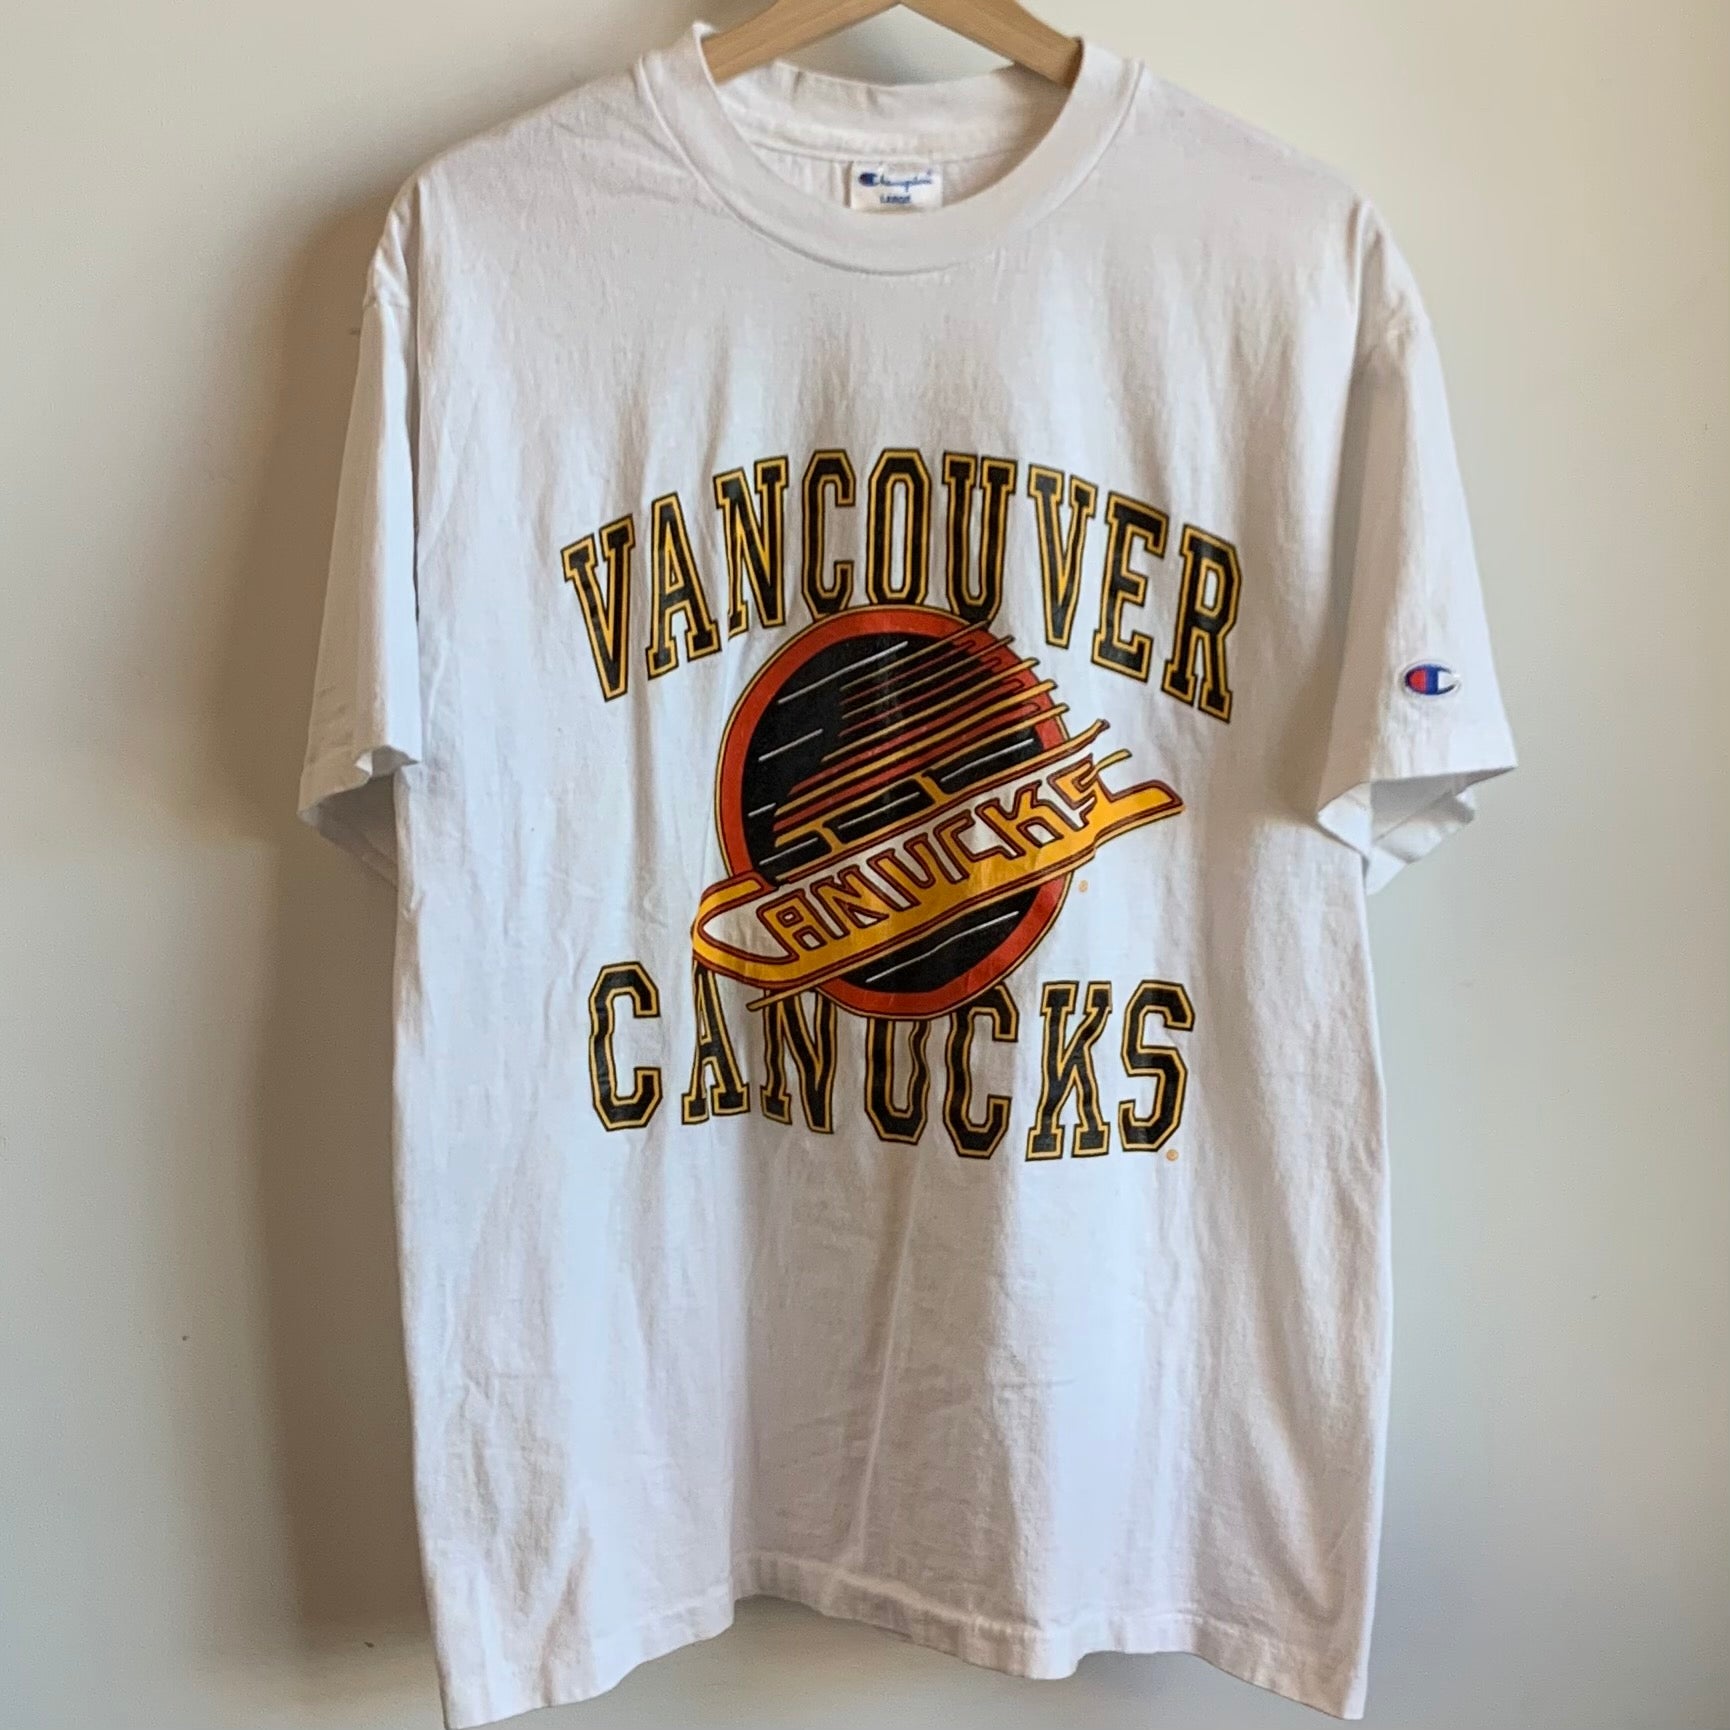 Vancouver Canucks T-Shirts, Vancouver Canucks T-Shirts